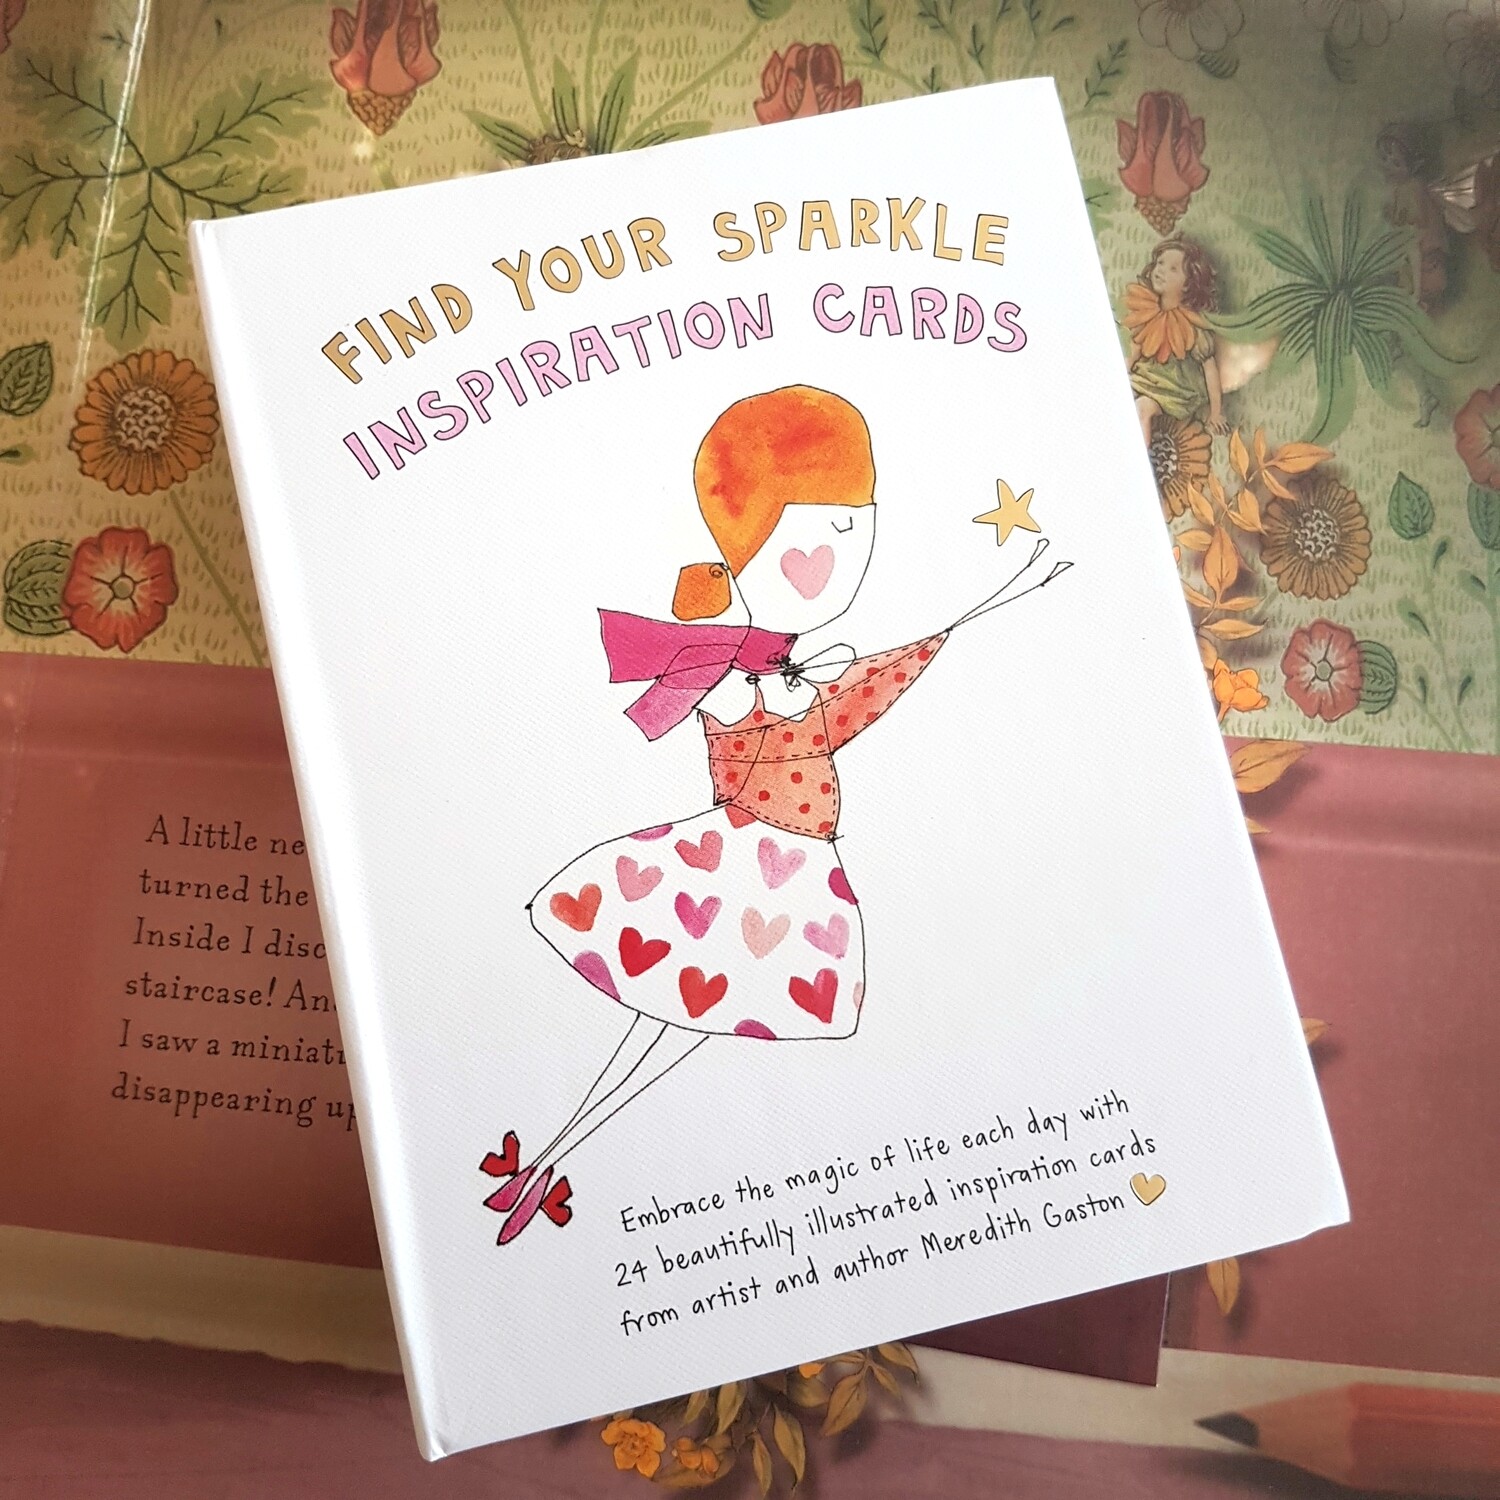 Find Your Sparkle Inspiration Cards - Meredith Gaston